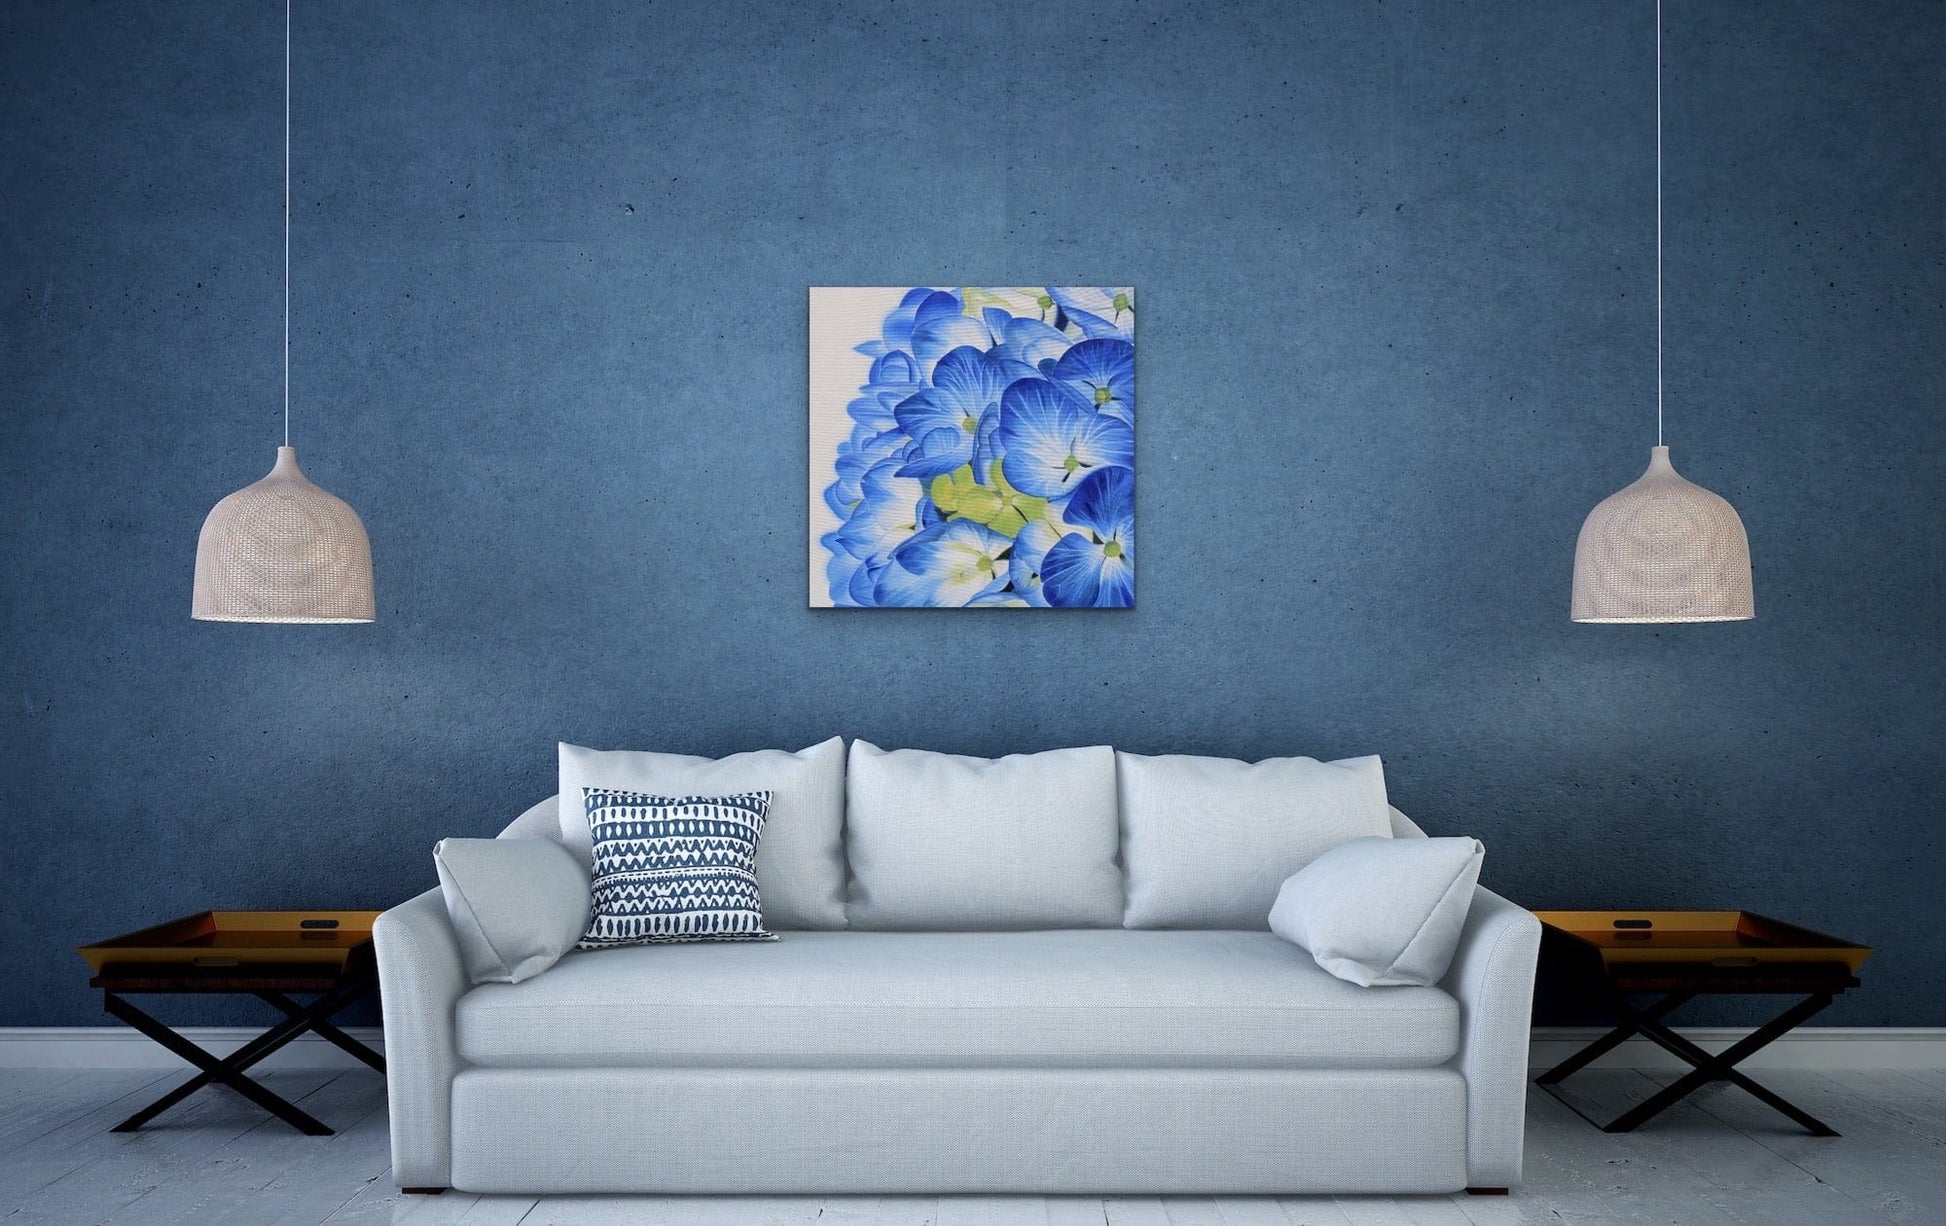 Floral Artwork Blue Blossoms  - Original Oil Painting by Shobika